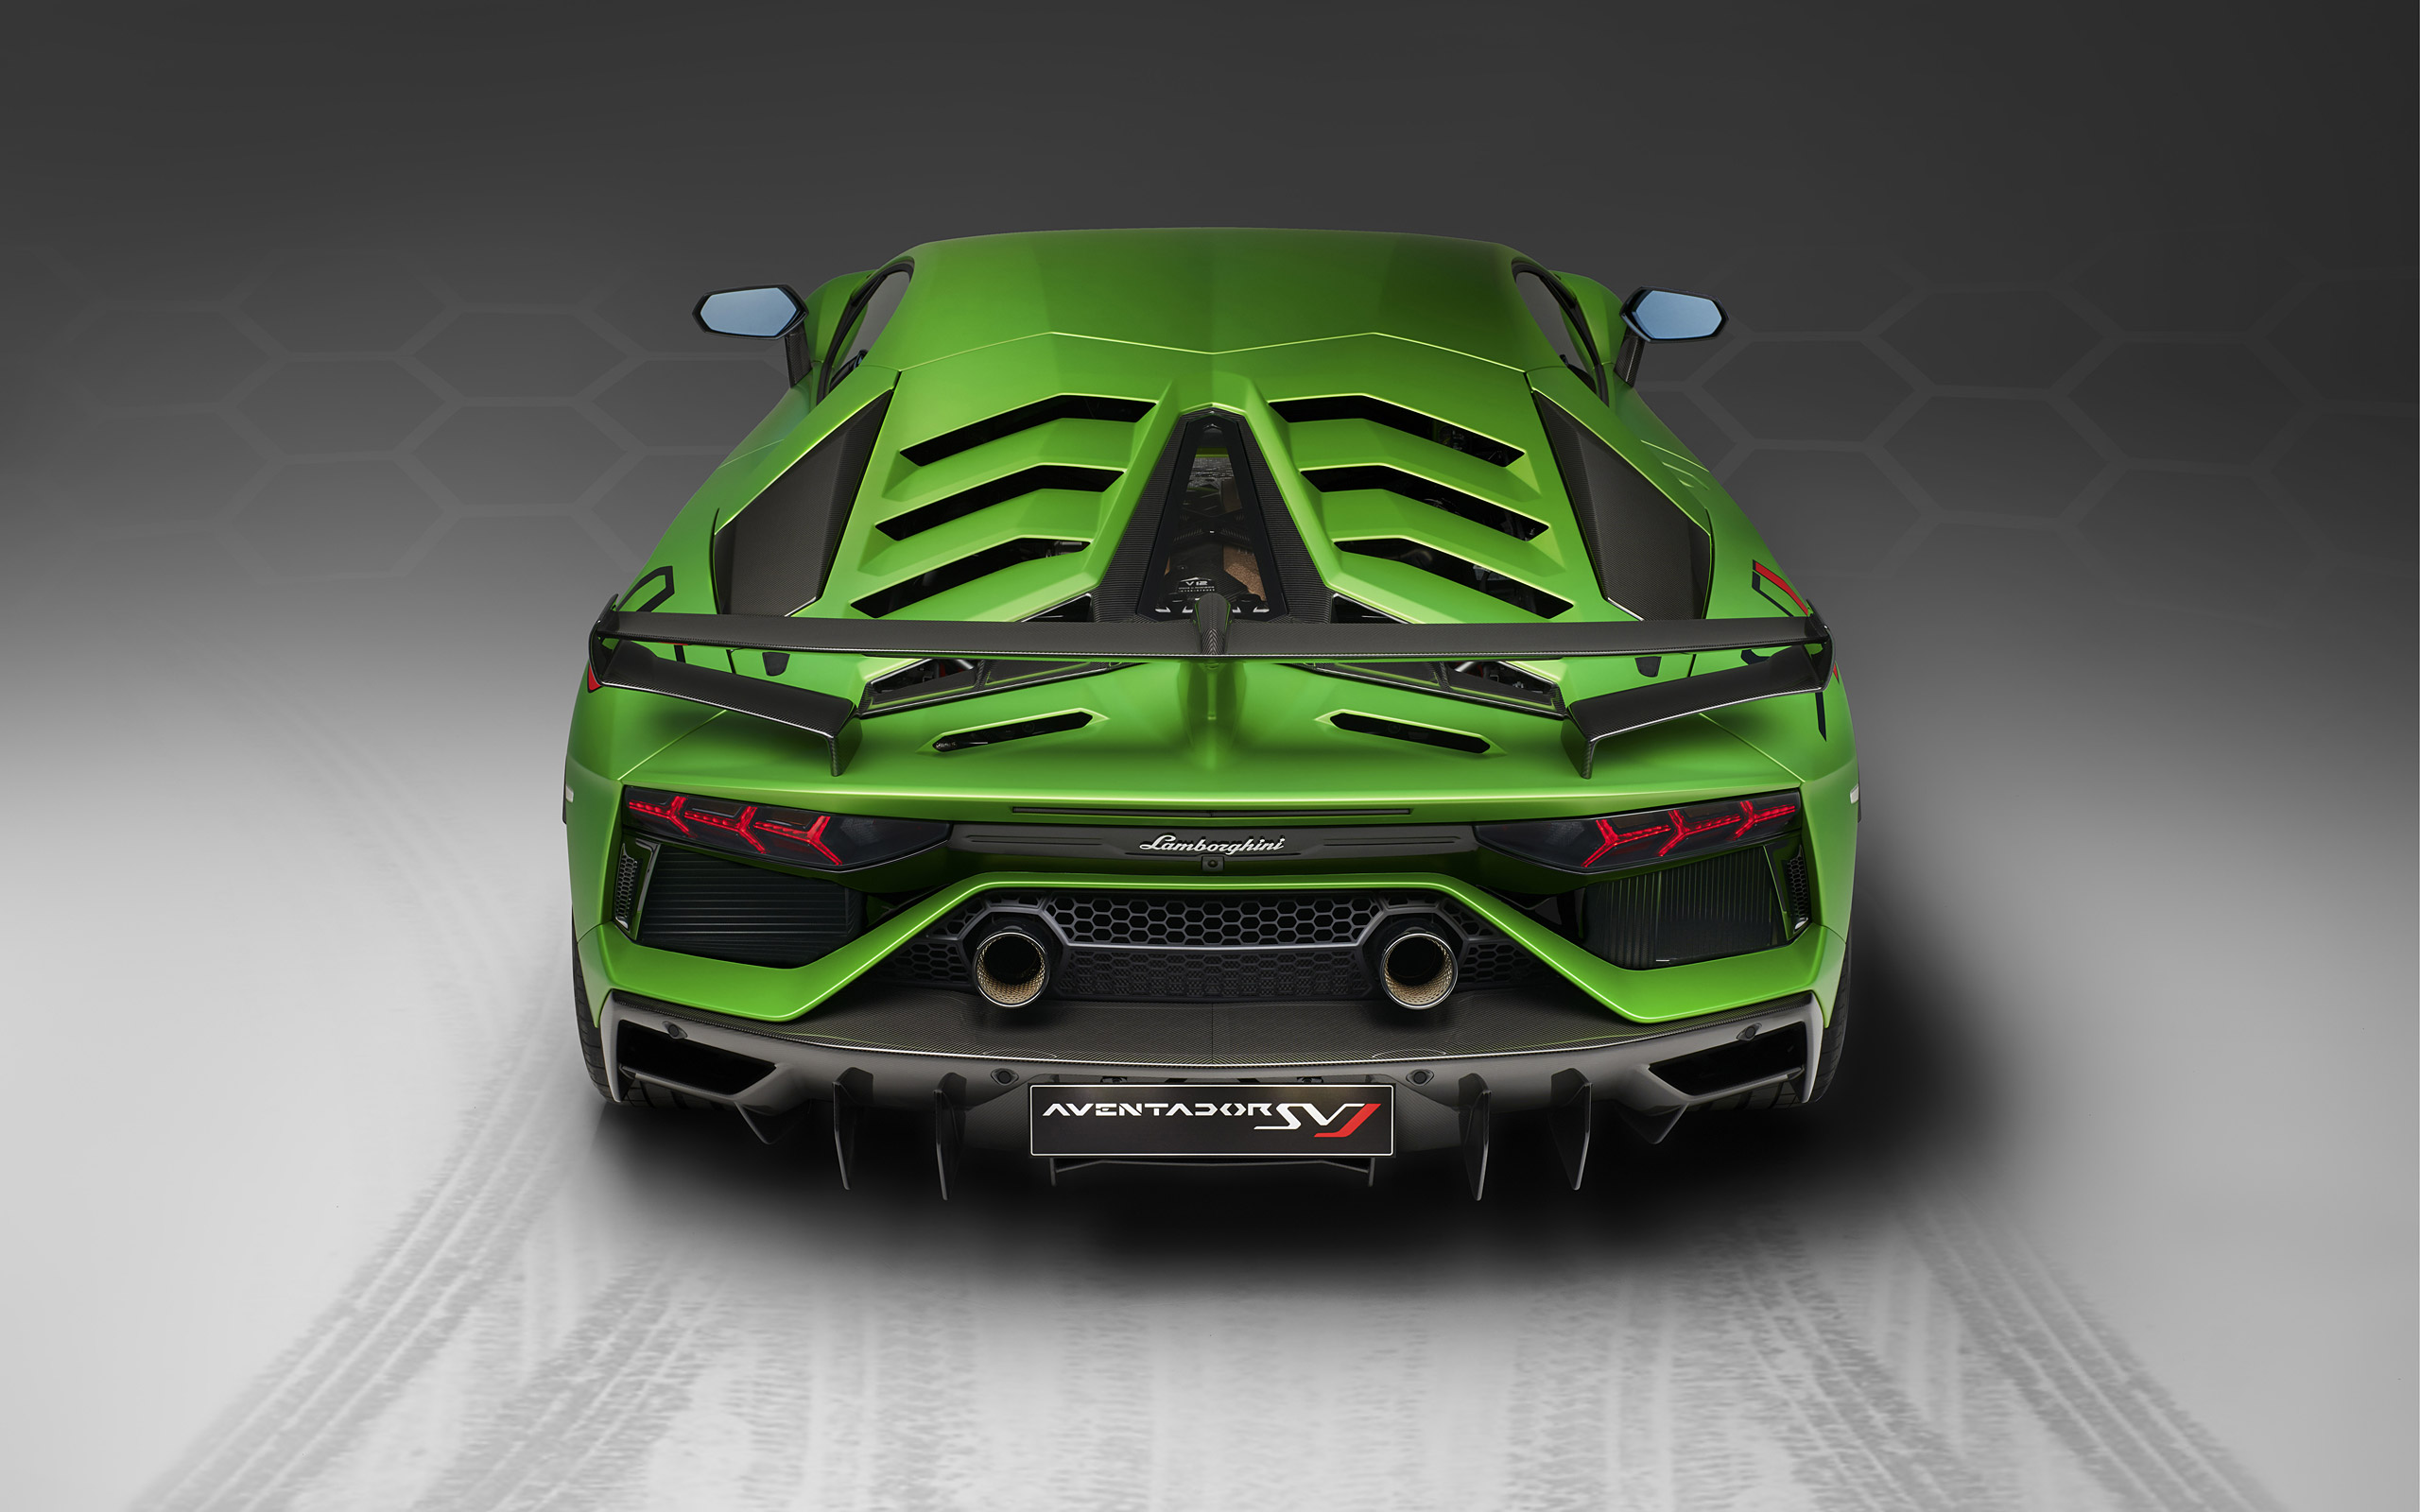  2019 Lamborghini Aventador SVJ Wallpaper.